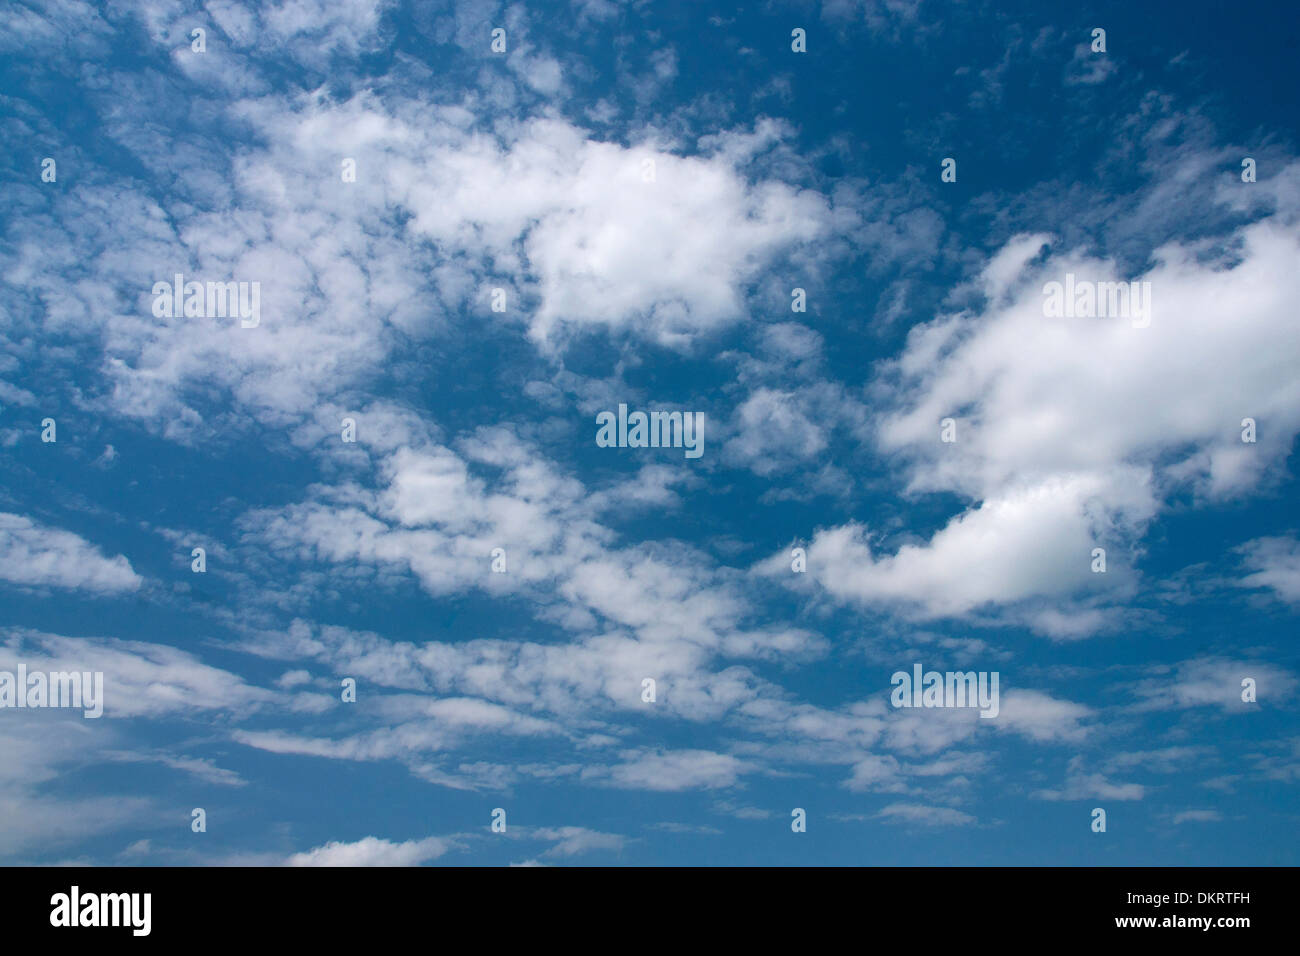 Germany, Europe, sky, blue sky, clouds, fleecy clouds, cumulus clouds, Cumulus, cloud formation, blue, white, weather, Stock Photo